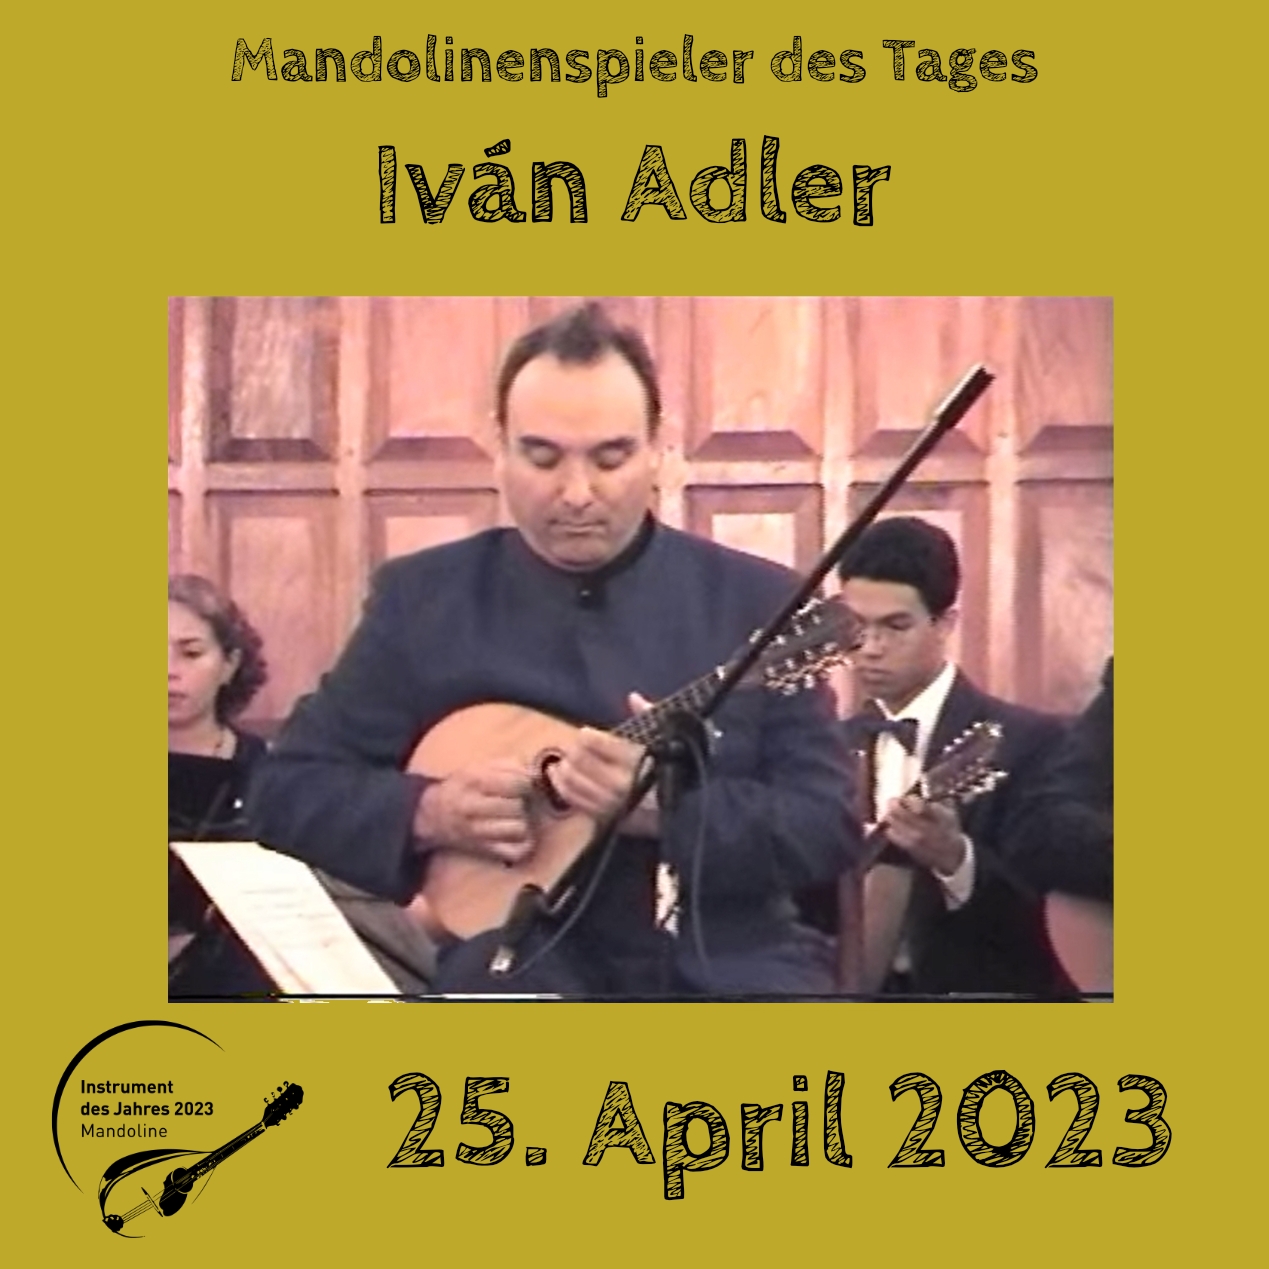 Iván Adler Instrument des Jahres 2023 Mandolinenspieler Mandolinenspielerin des Tages